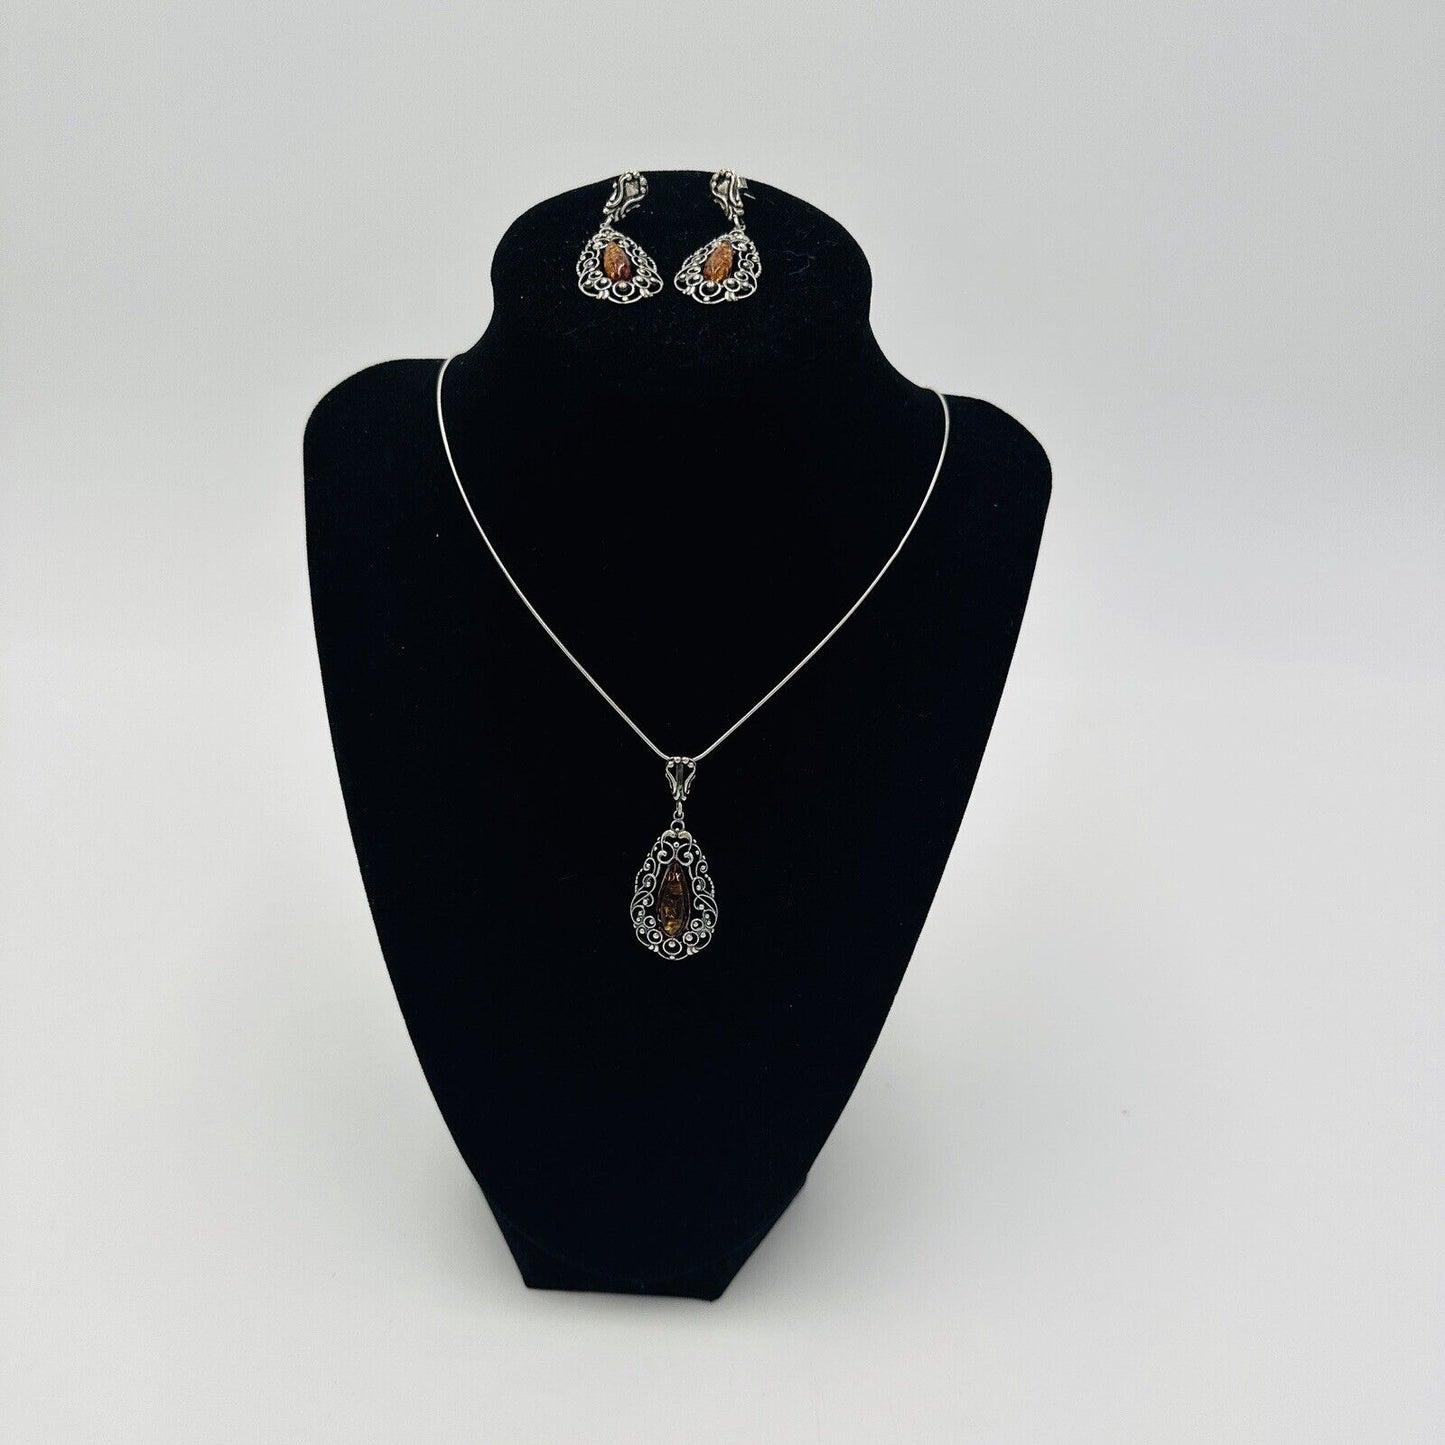 Vintage Baltic Amber Sterling Silver Necklace Pendant Earrings Set Women Jewelry